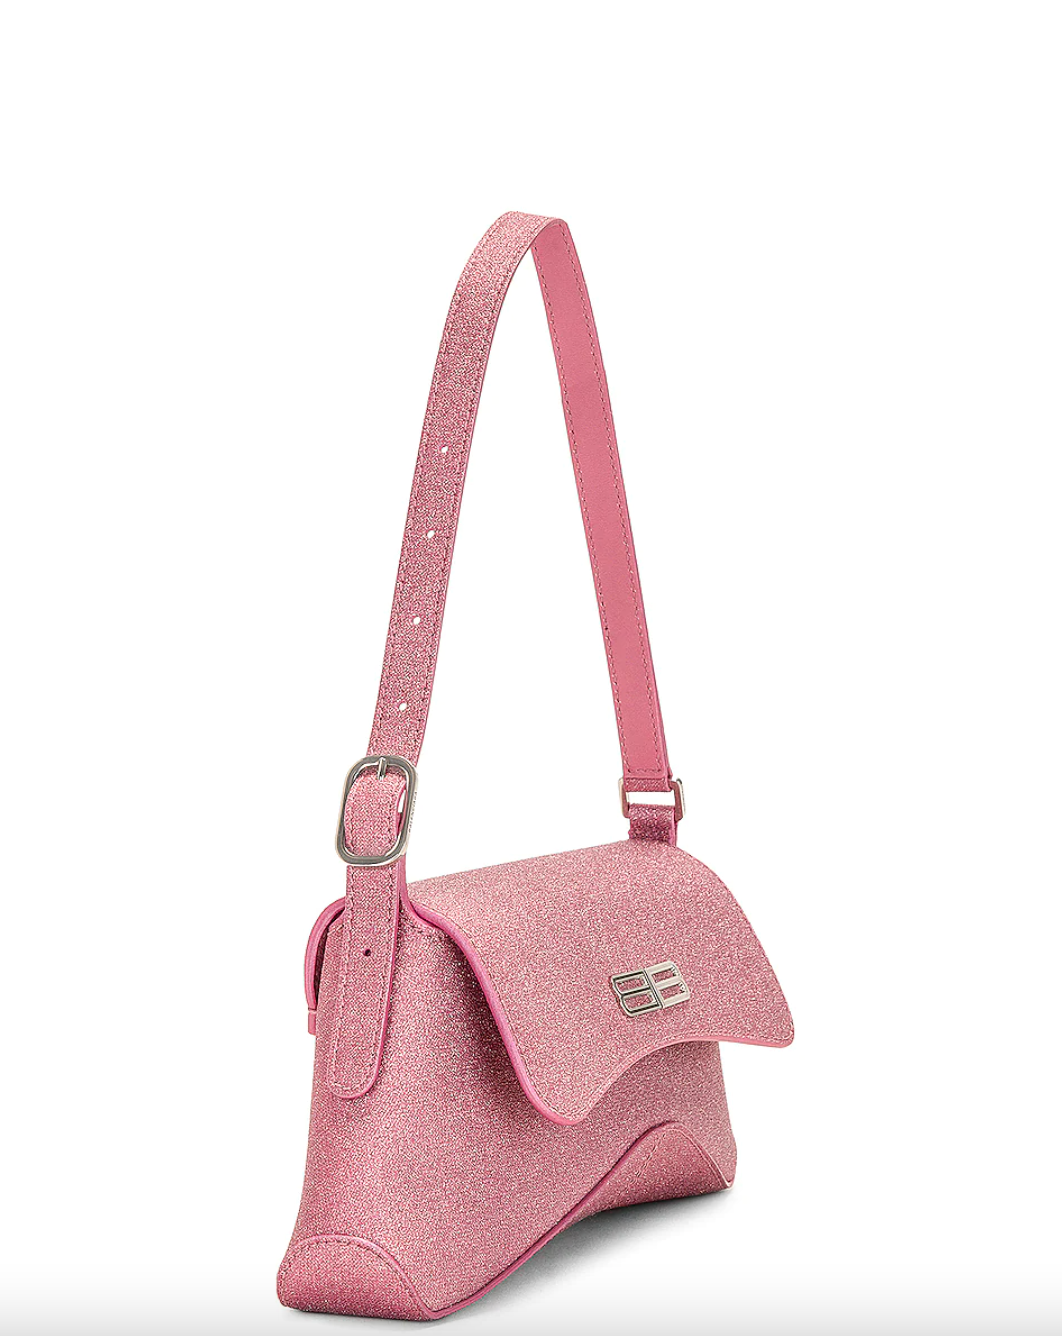 Balenciaga XX Small Flap Shoulder Bag in Sweet Pink